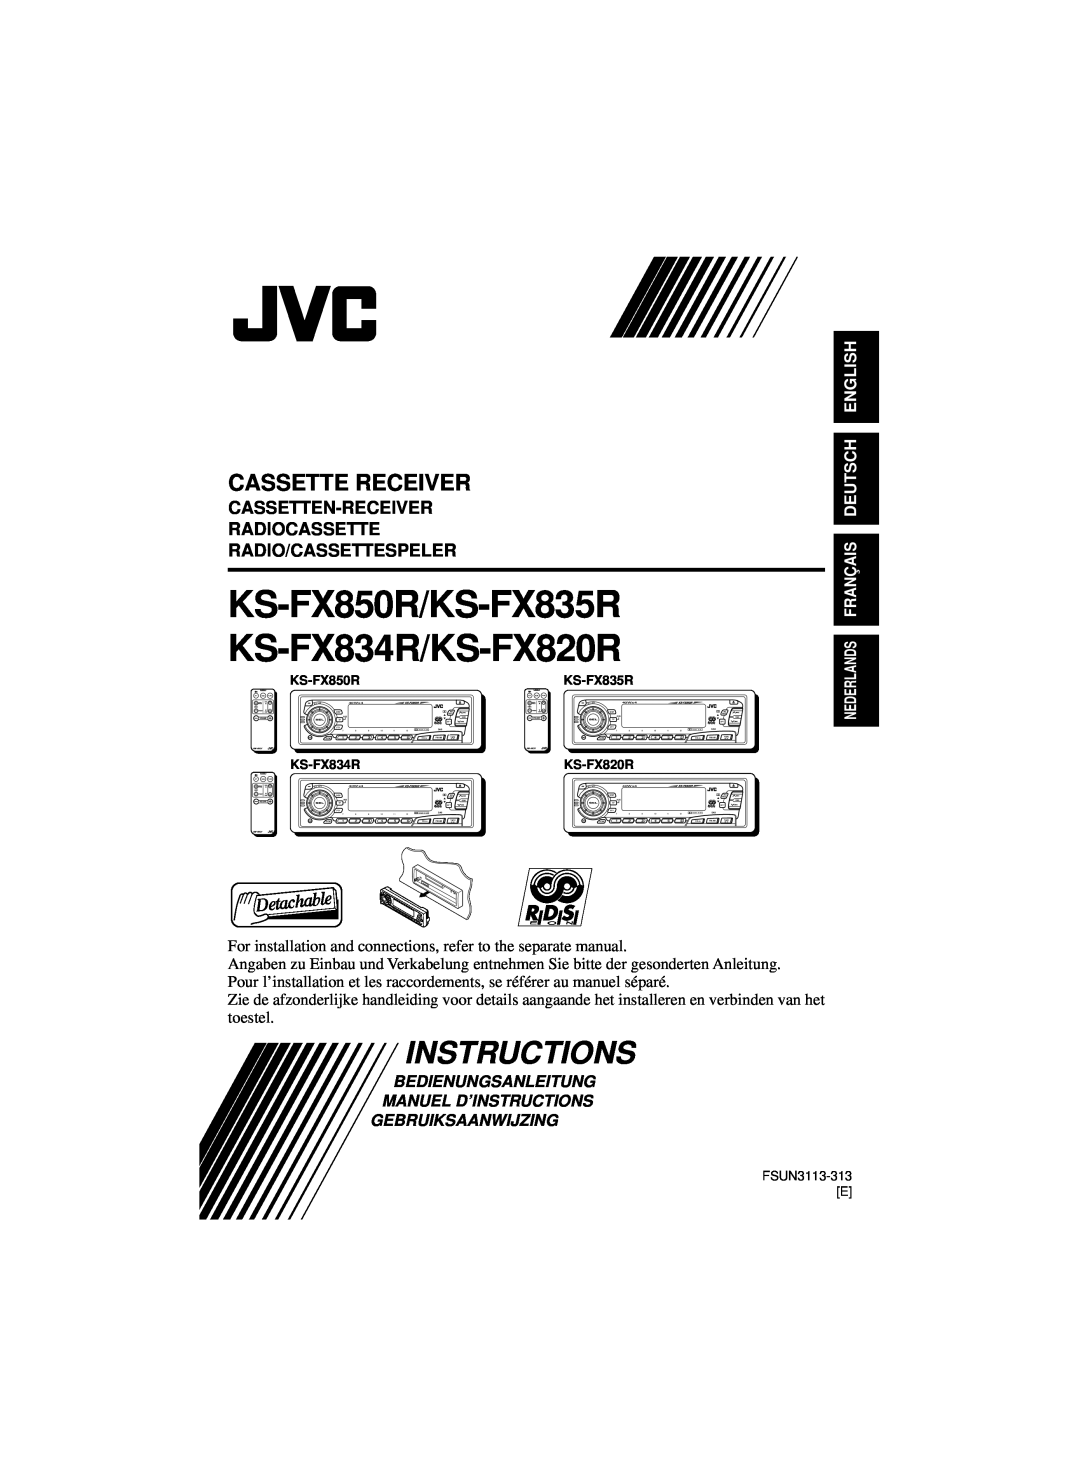 JVC KS-FX820R, KS-FX850R manual Instructions, Cassetten-Receiver Radiocassette, Radio/Cassettespeler, English Deutsch 